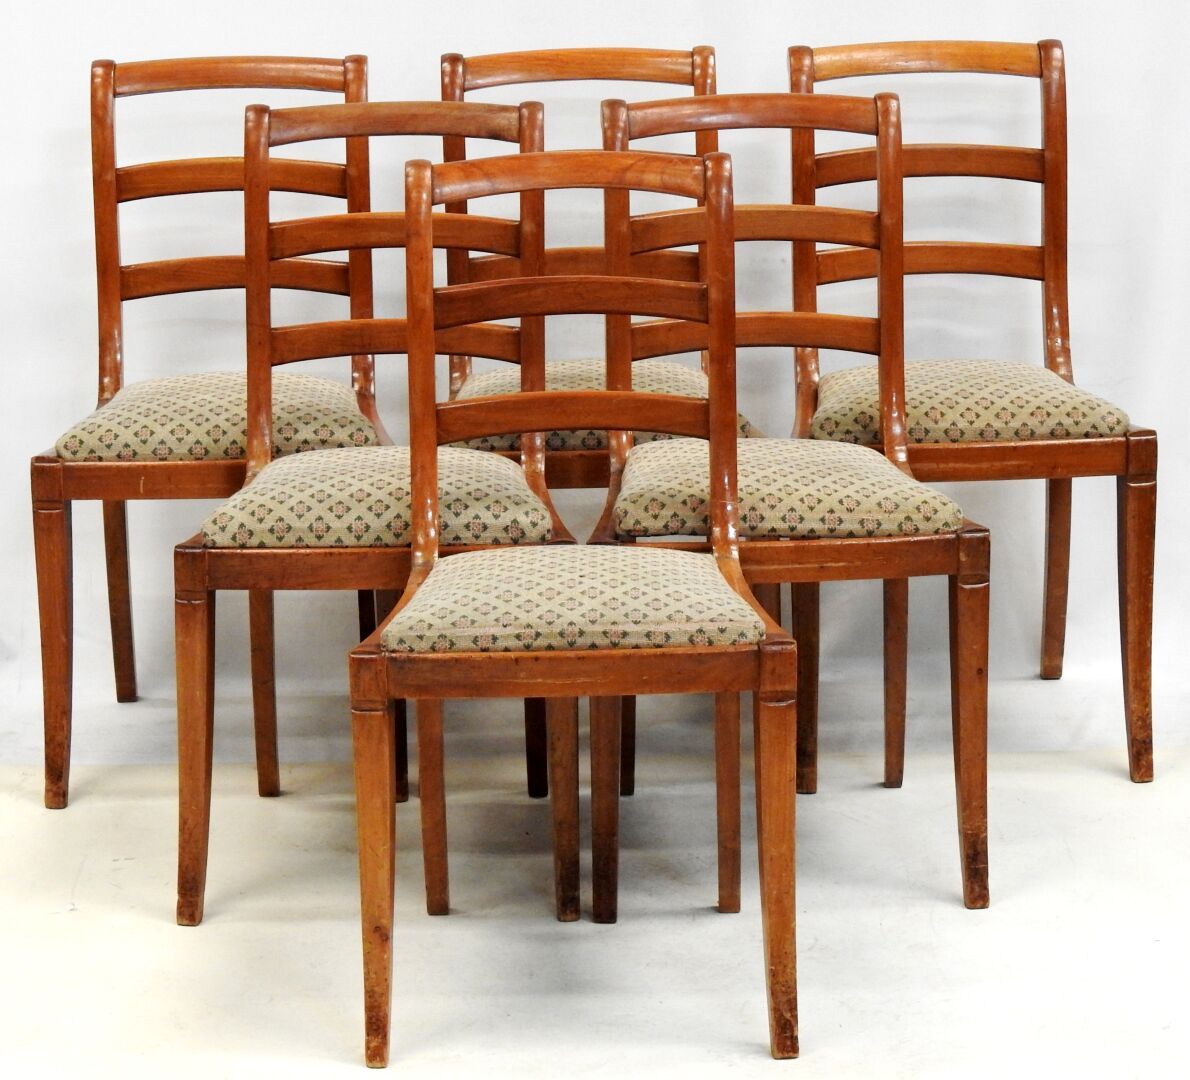 Null Conjunto de seis sillas de madera natural con respaldo calado

Desgaste.